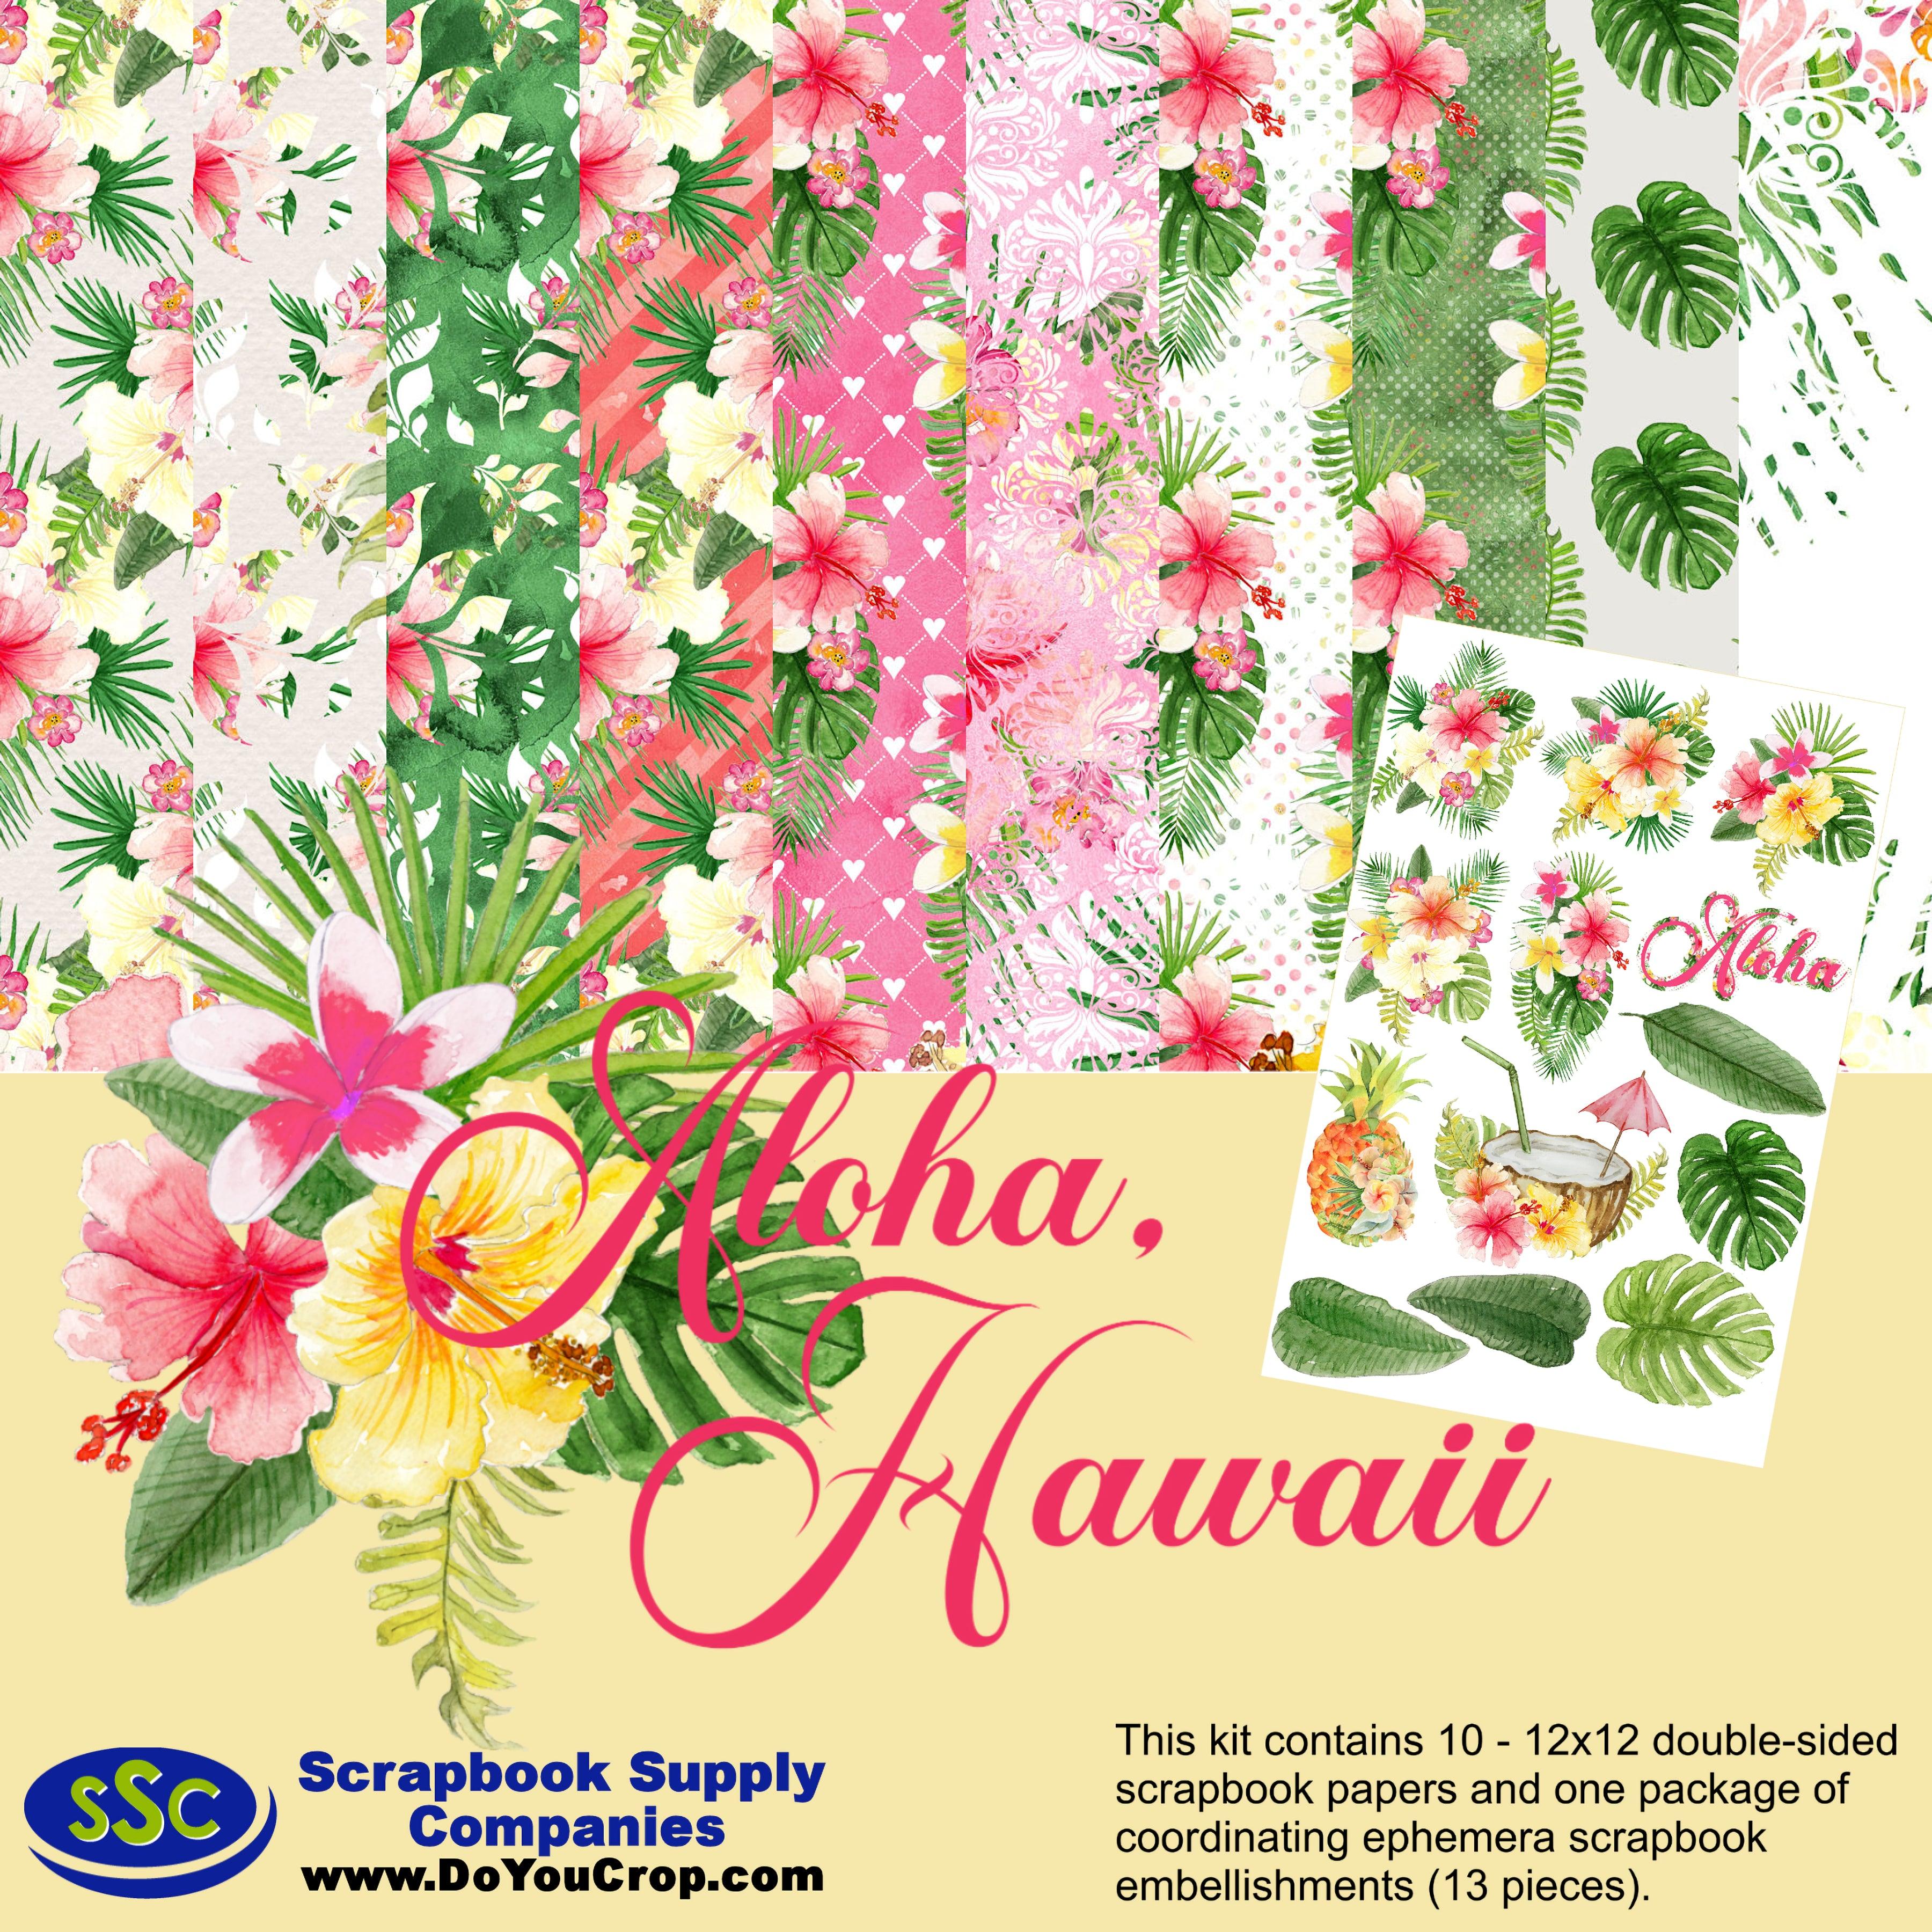 Aloha, Hawaii 12 x 12 Scrapbook Paper & Embellishment Kit by SSC Designs